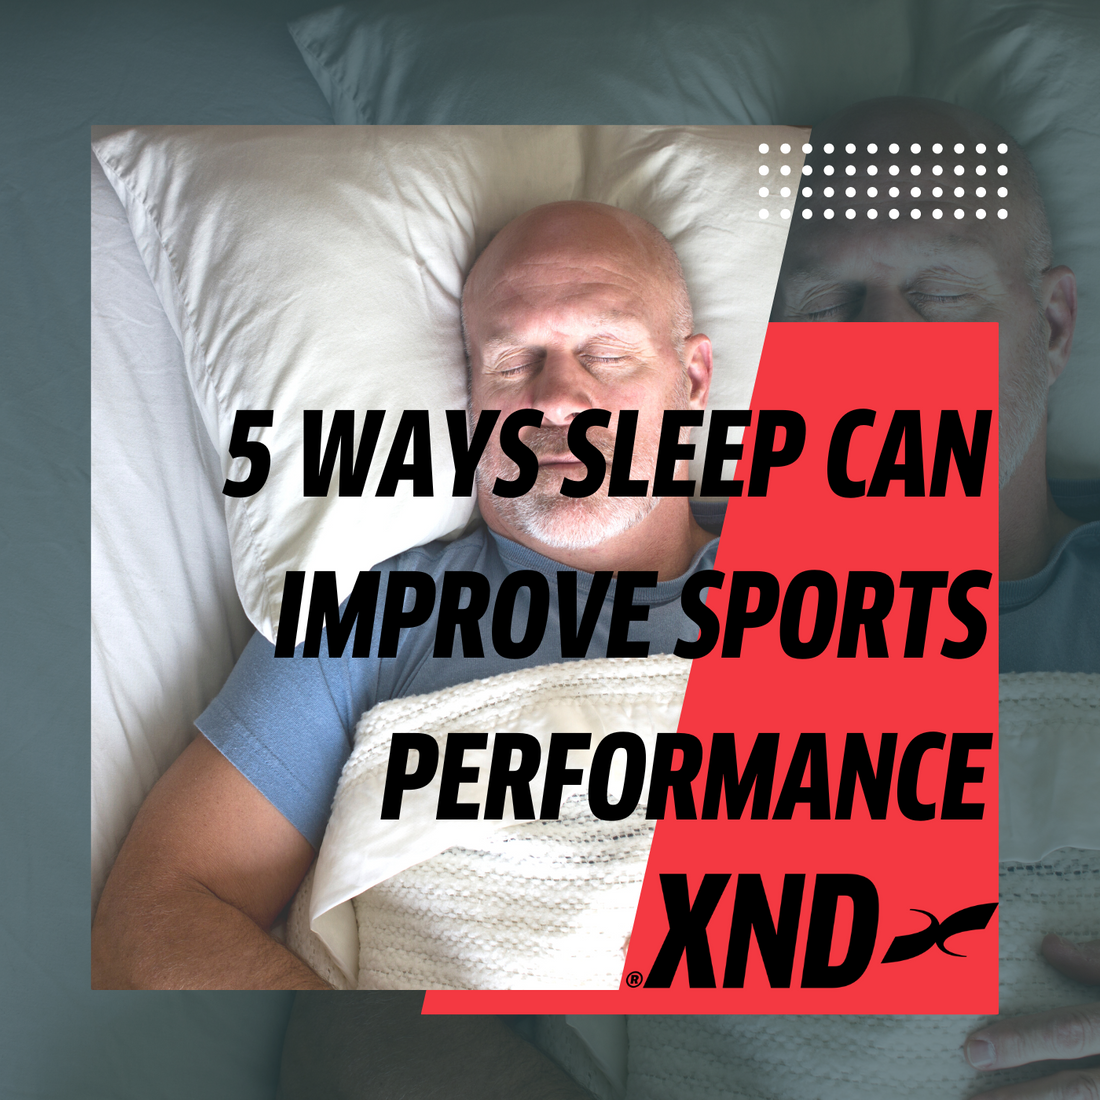 5 ways sleep can improve sports performance